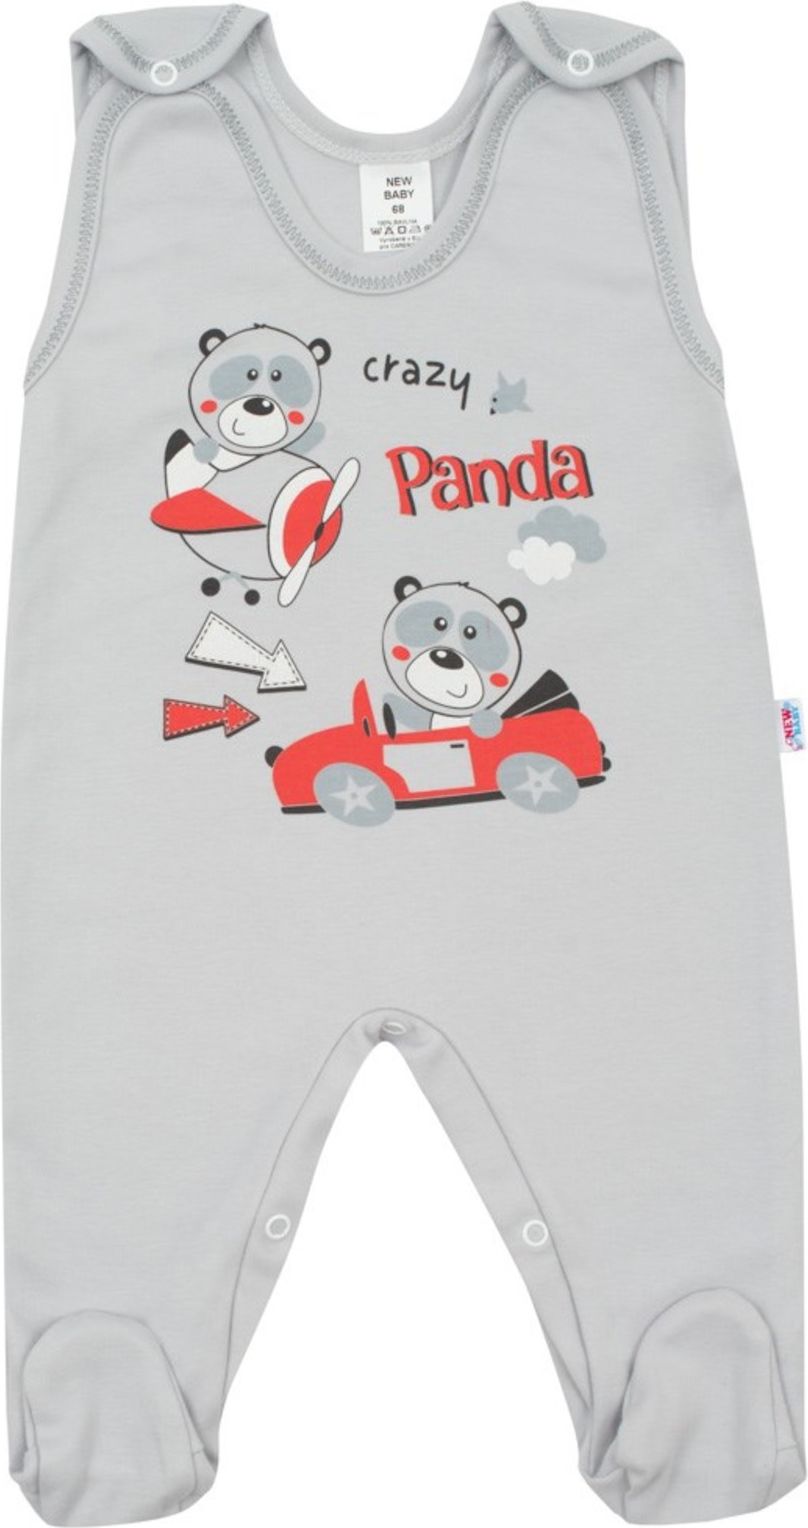 Kojenecké dupačky New Baby Crazy Panda - Kojenecké dupačky New Baby Crazy Panda - obrázek 1